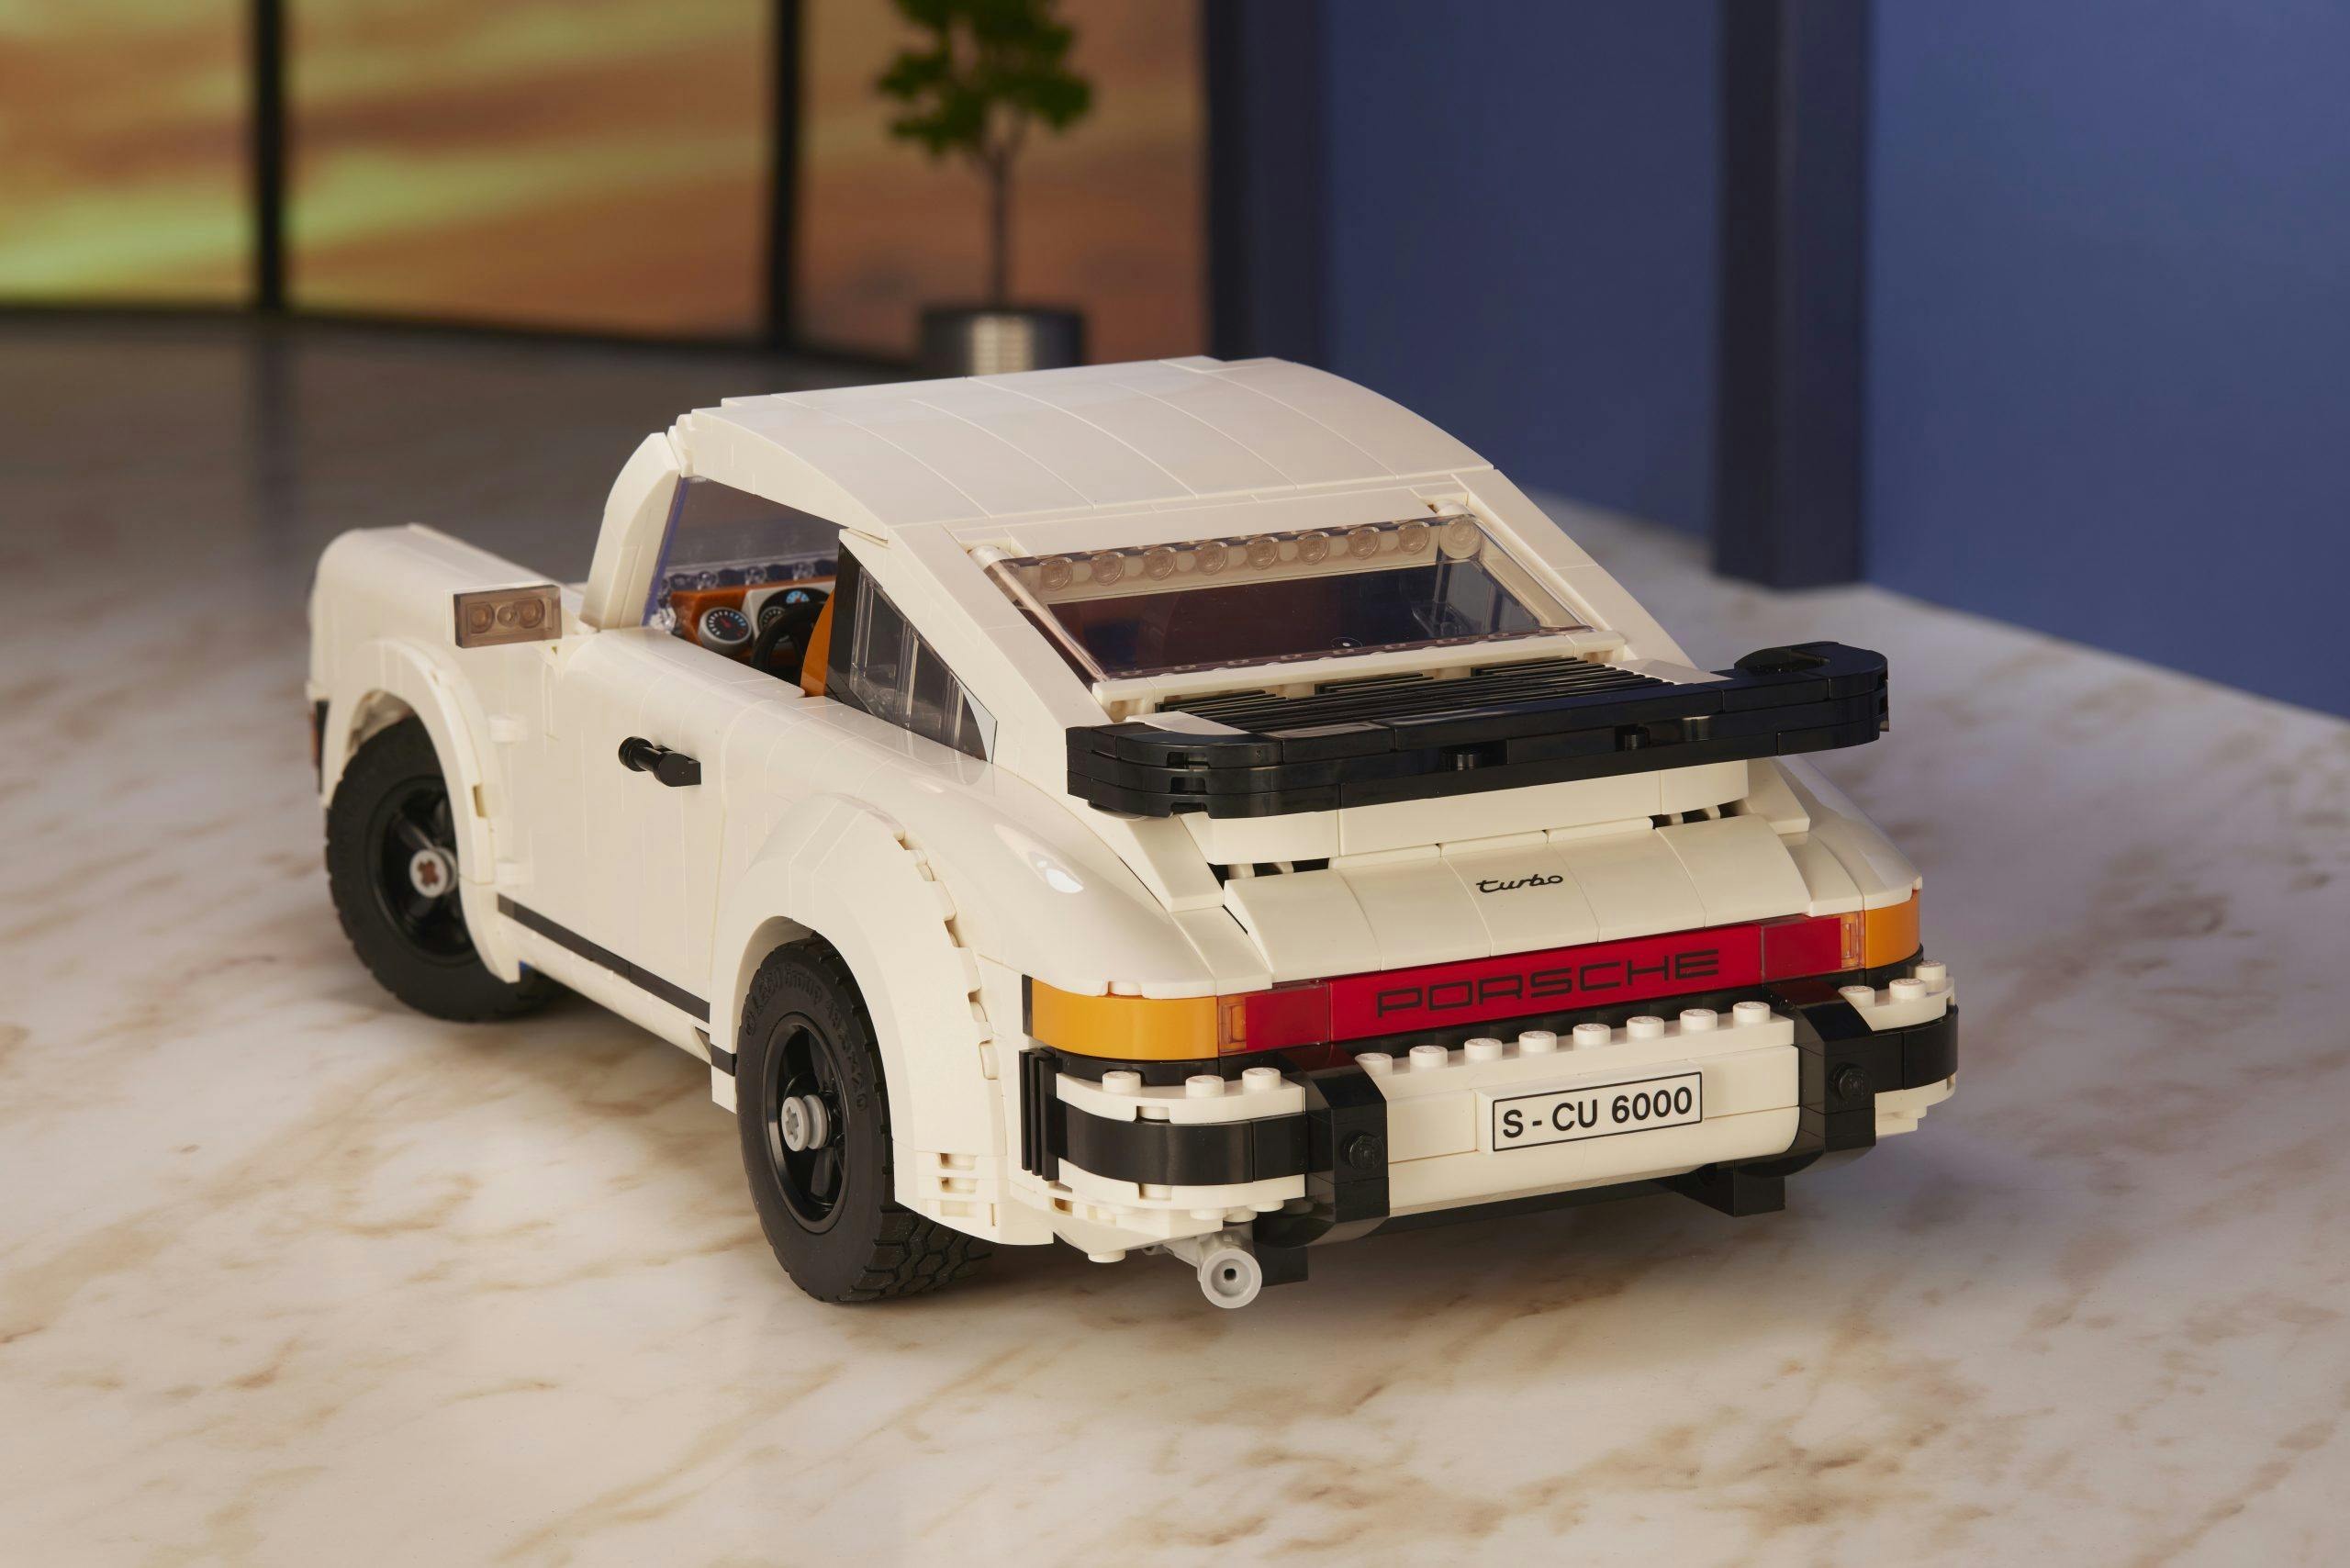 Lego Porsche 911 two-in-one set Turbo build rear